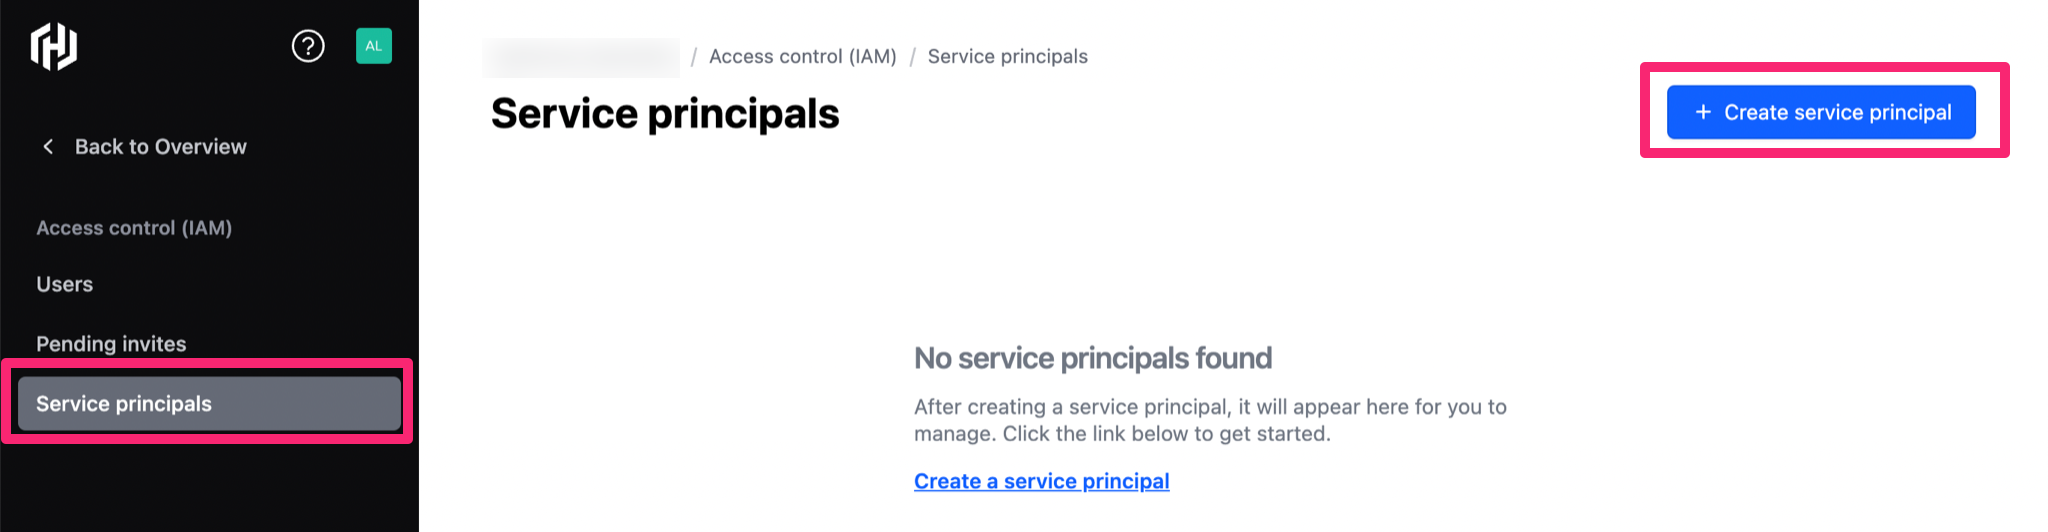 Create service principal button on Service principals page